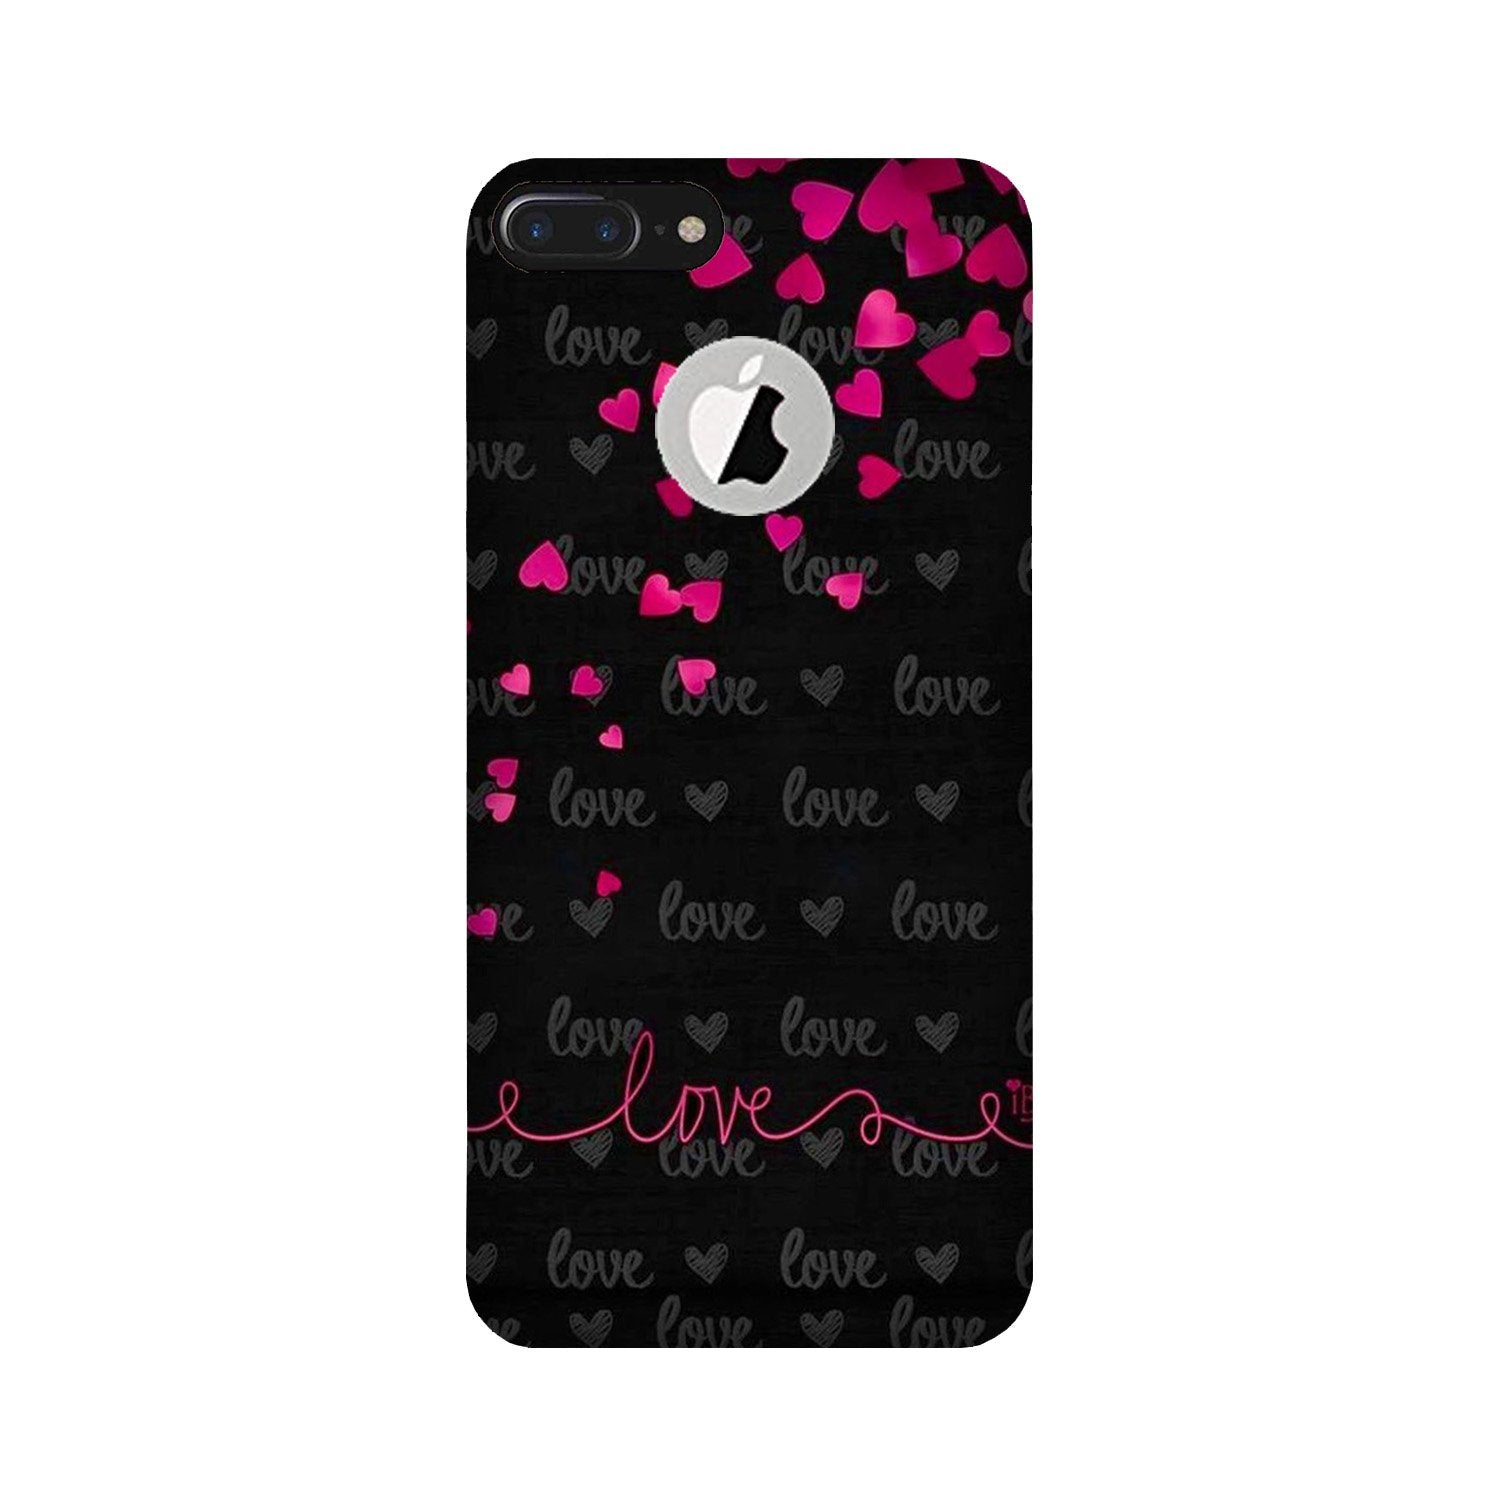 Love in Air Case for iPhone 7 Plus logo cut